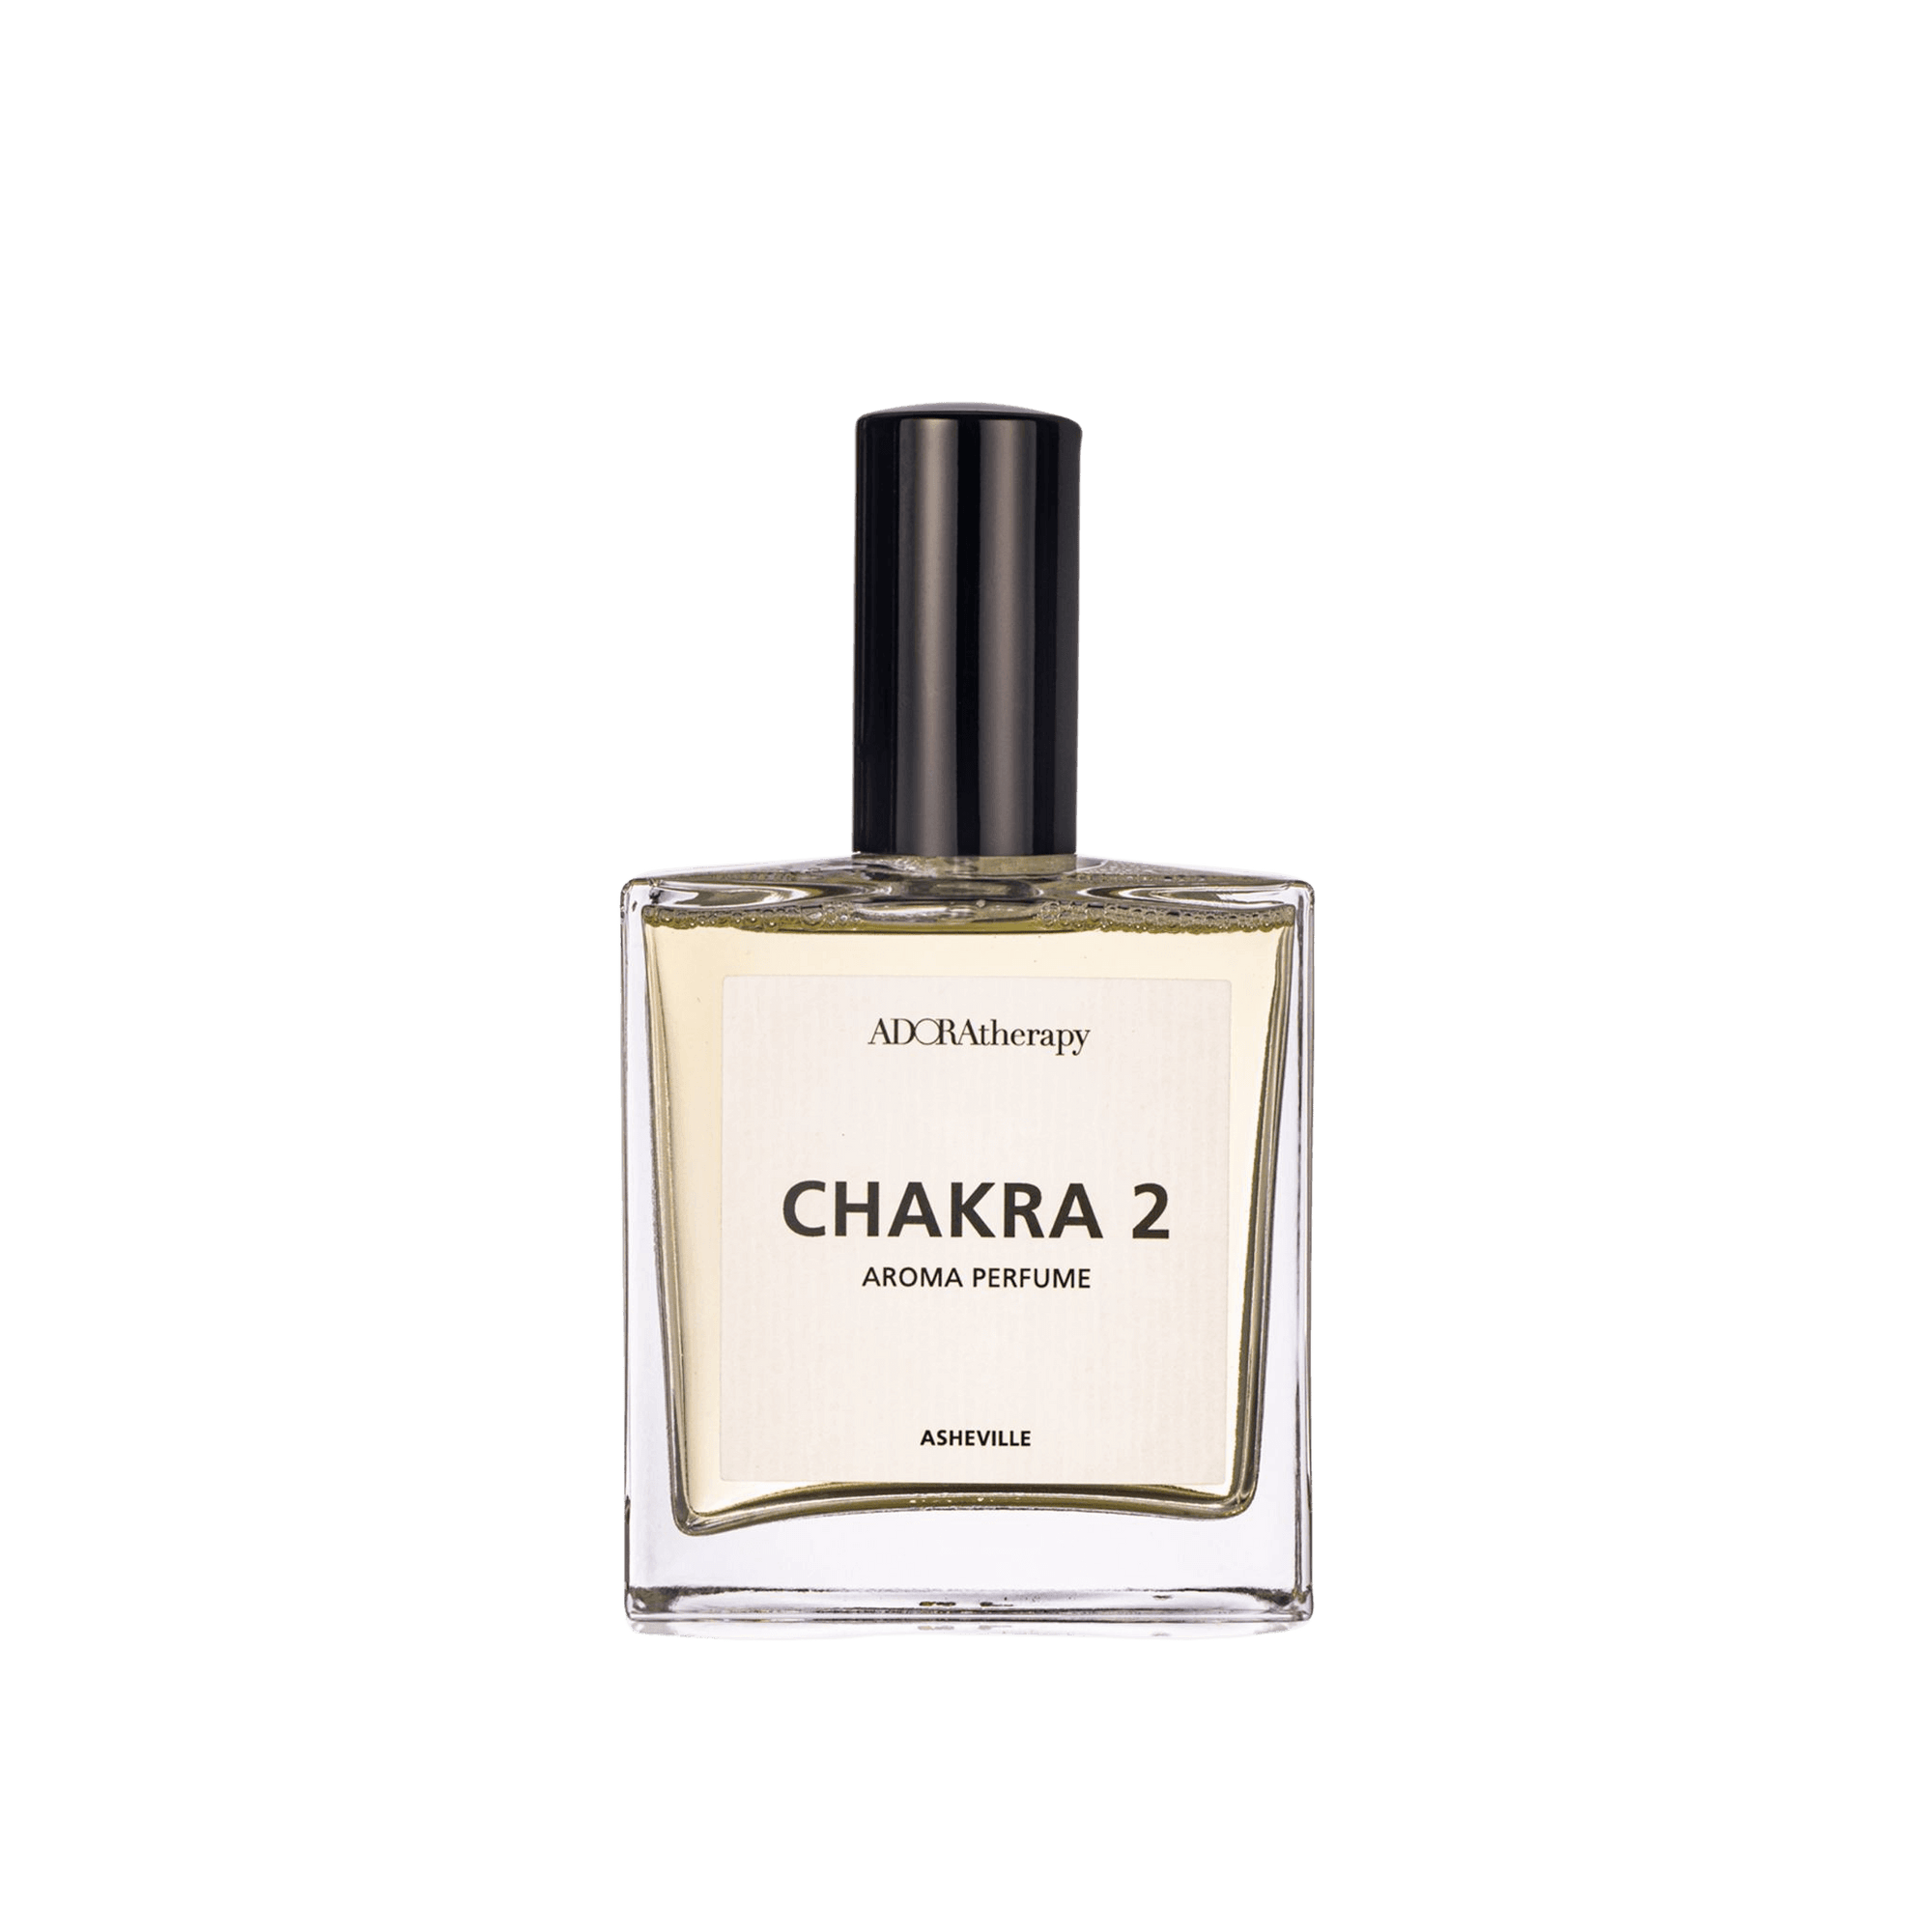 Chakra perfume 1